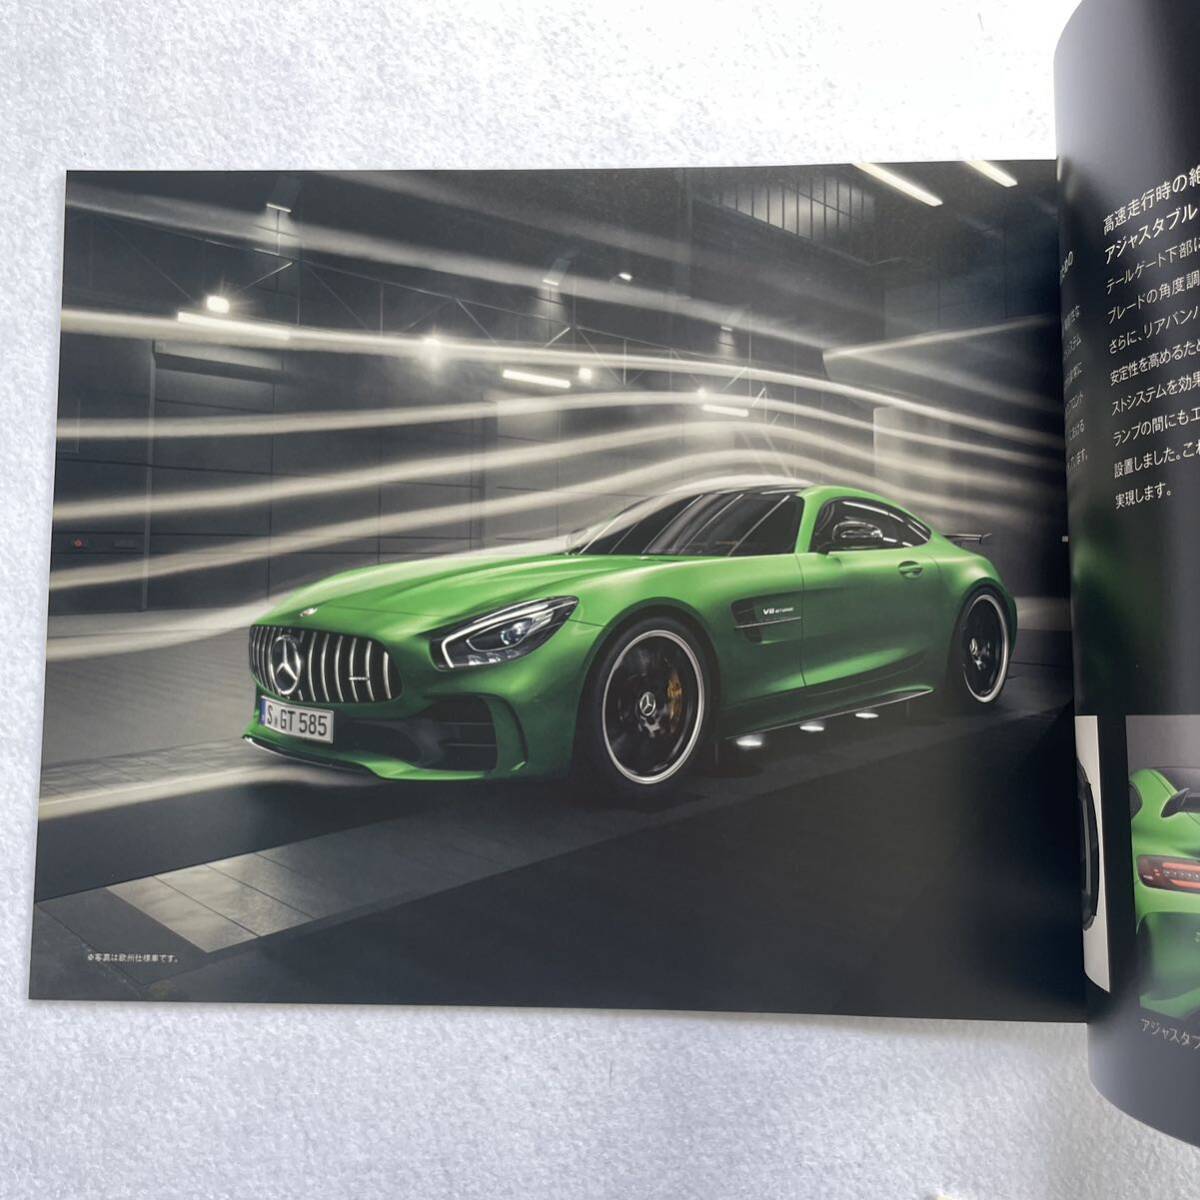 Mercedes AMG GT-R  каталог 　2017 год  издание 　41 страница 　 Mercedes AMG  Mercedes-Benz 　 Mercedes ...